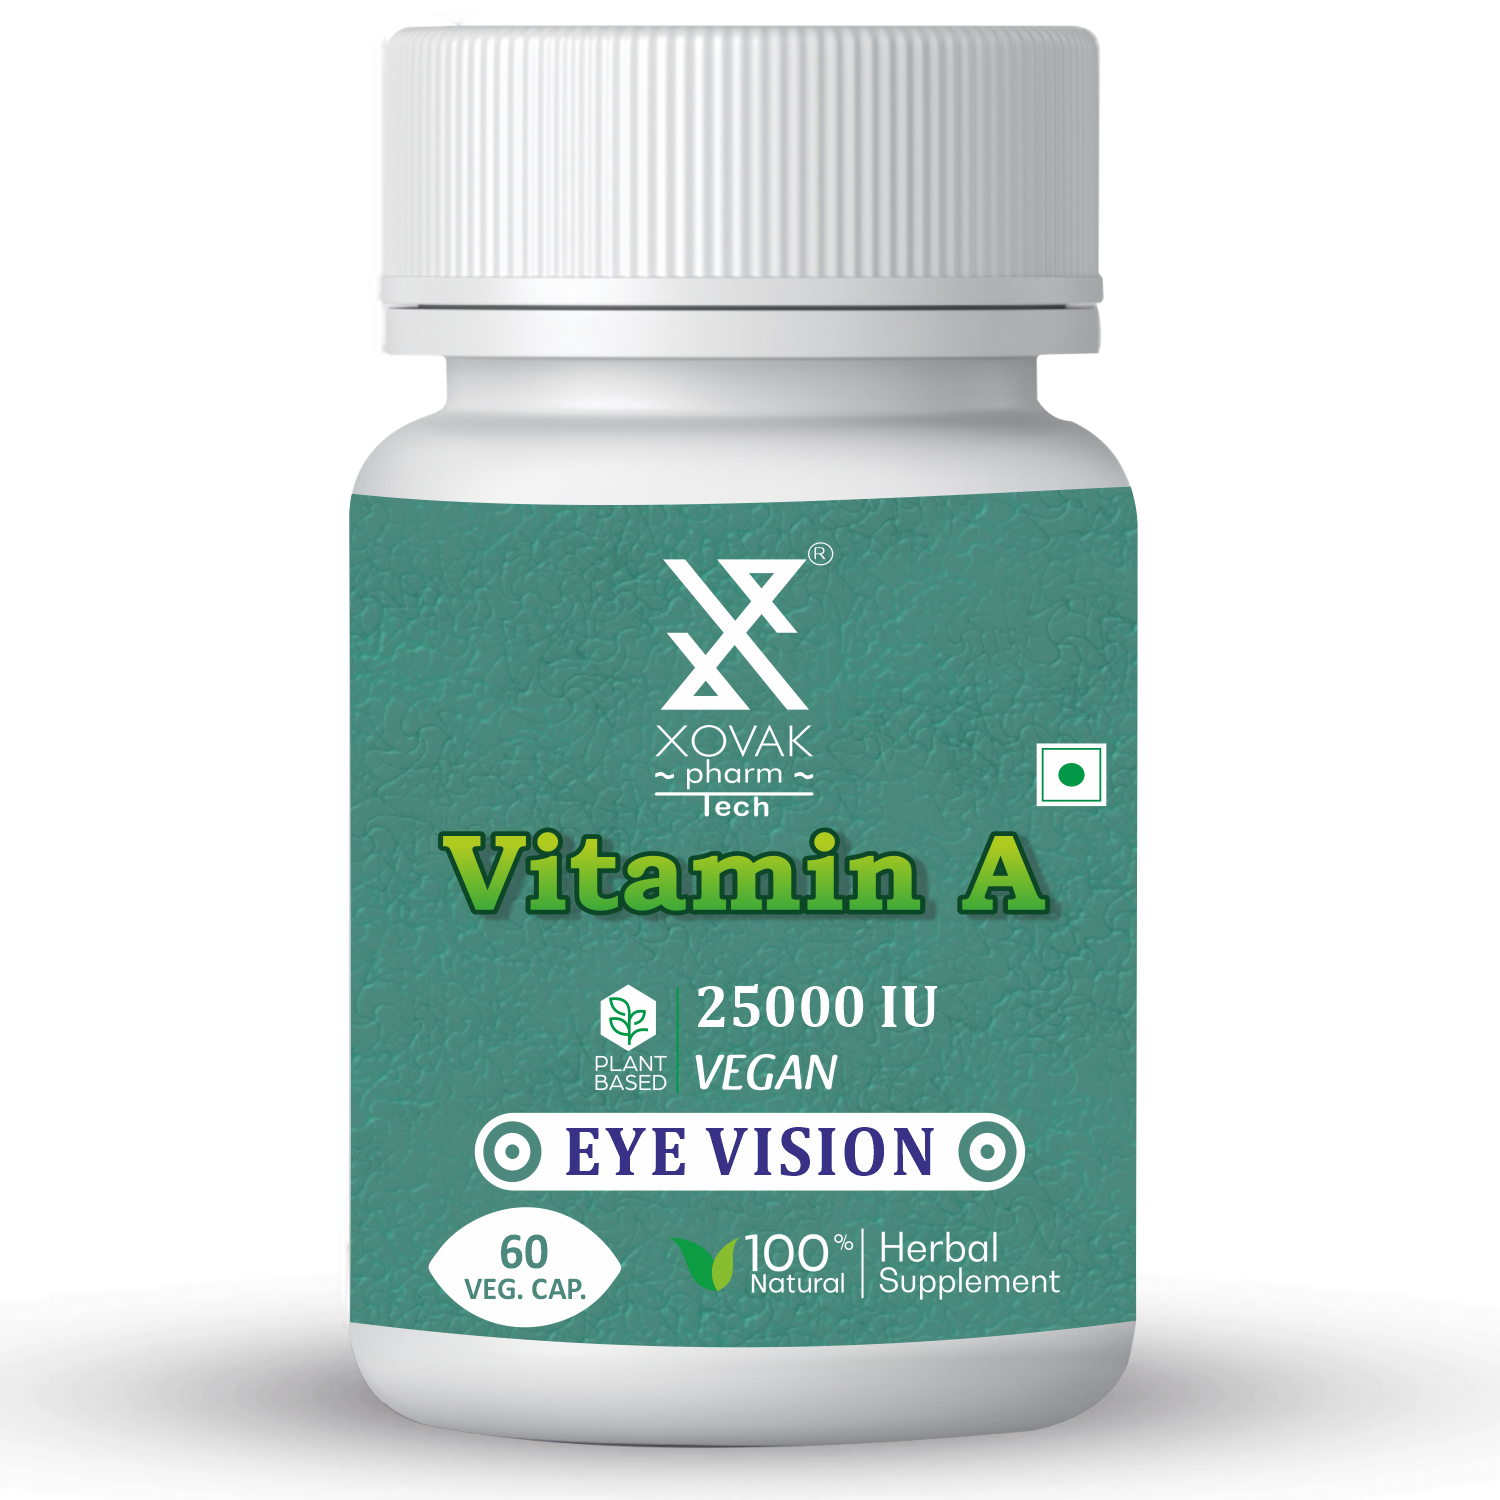 Buy Xovak Ayurvedic Vitamin A at Best Price Online